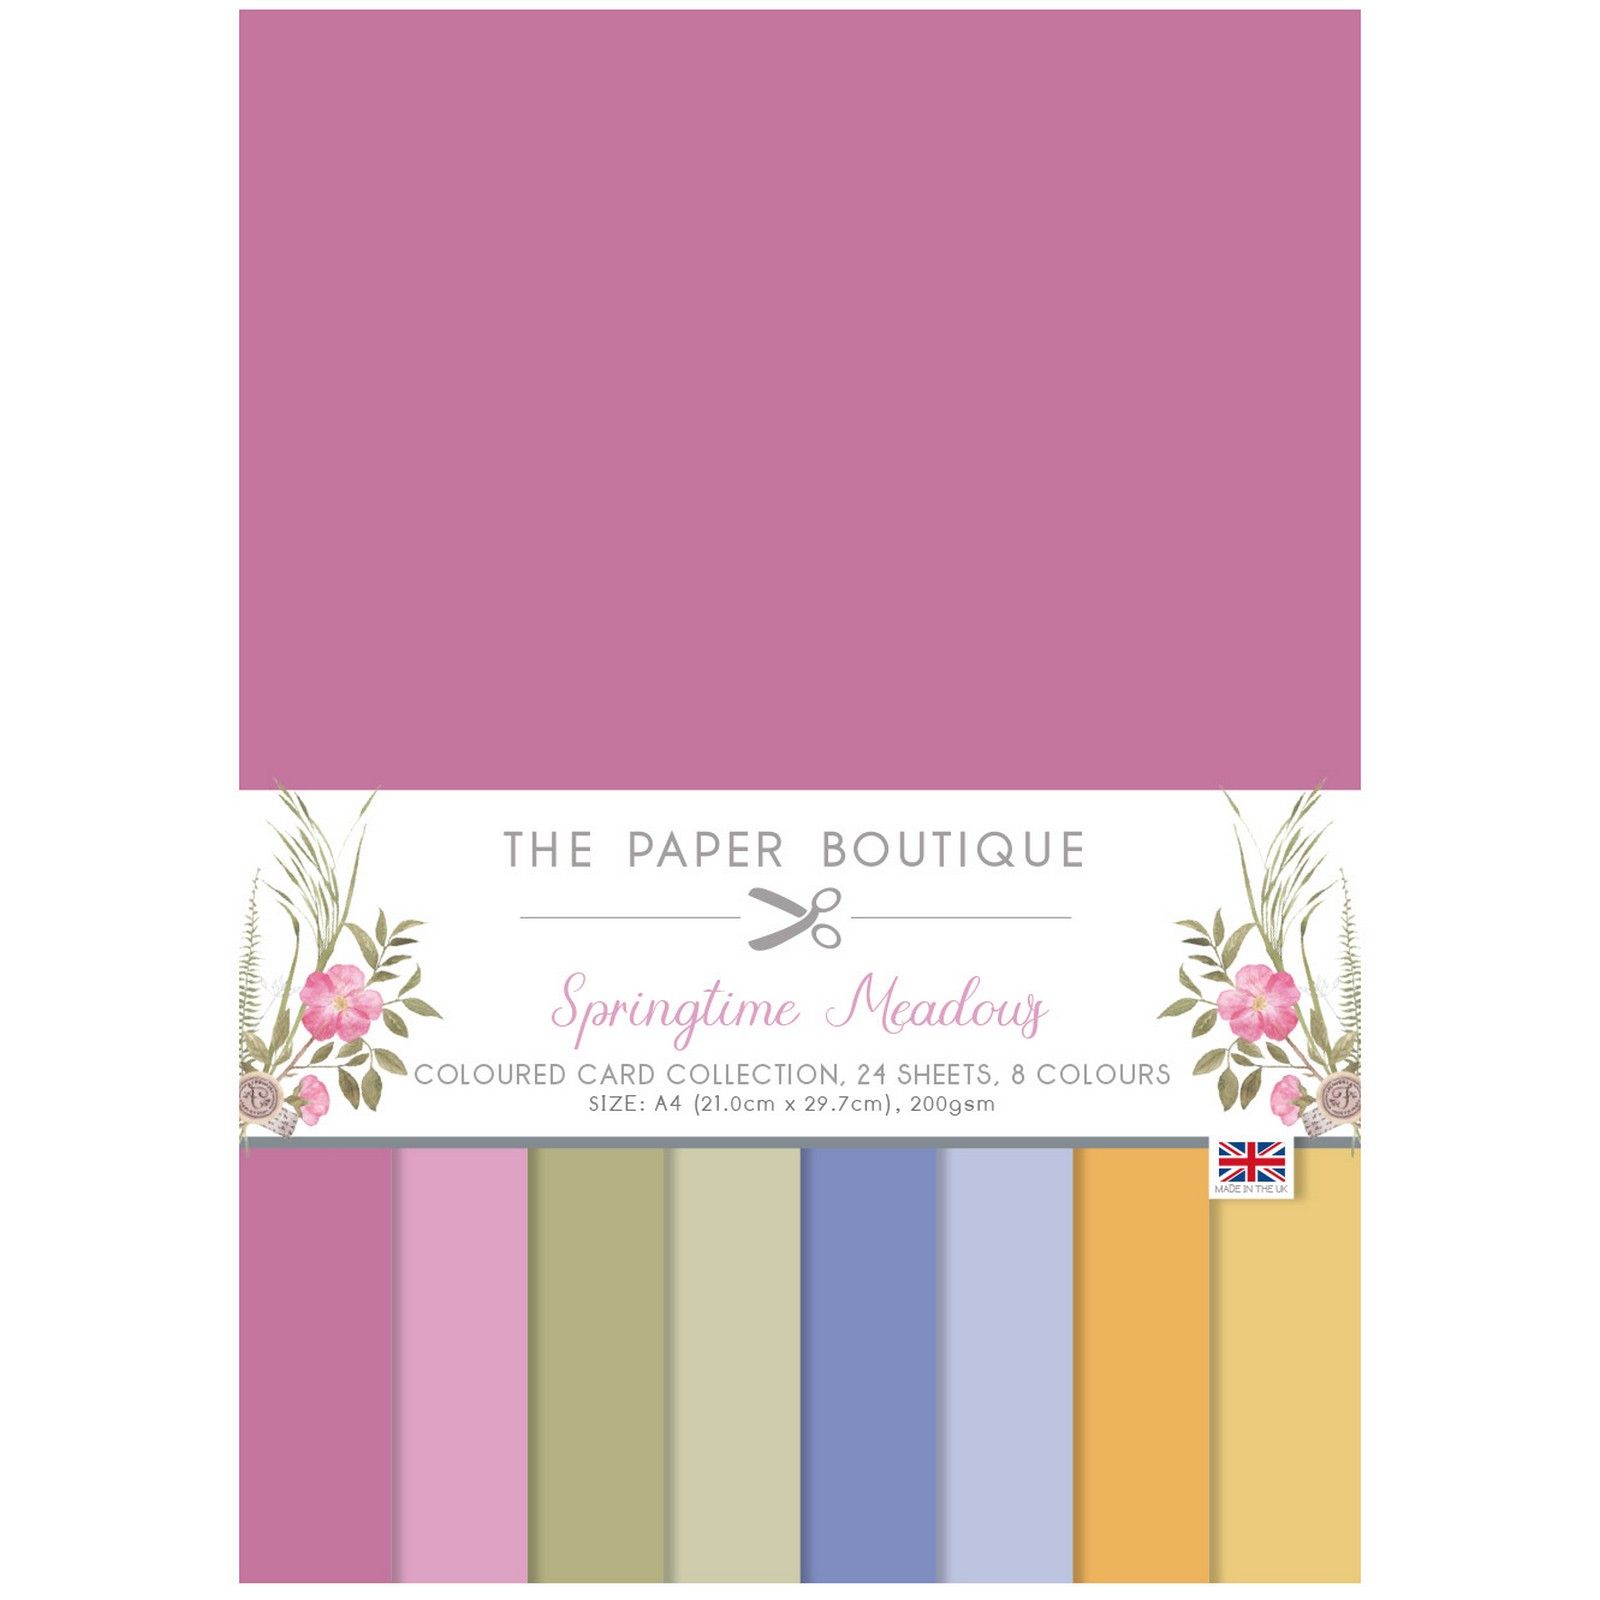 The Paper Boutique • Spring Meadows Colour Card Collection